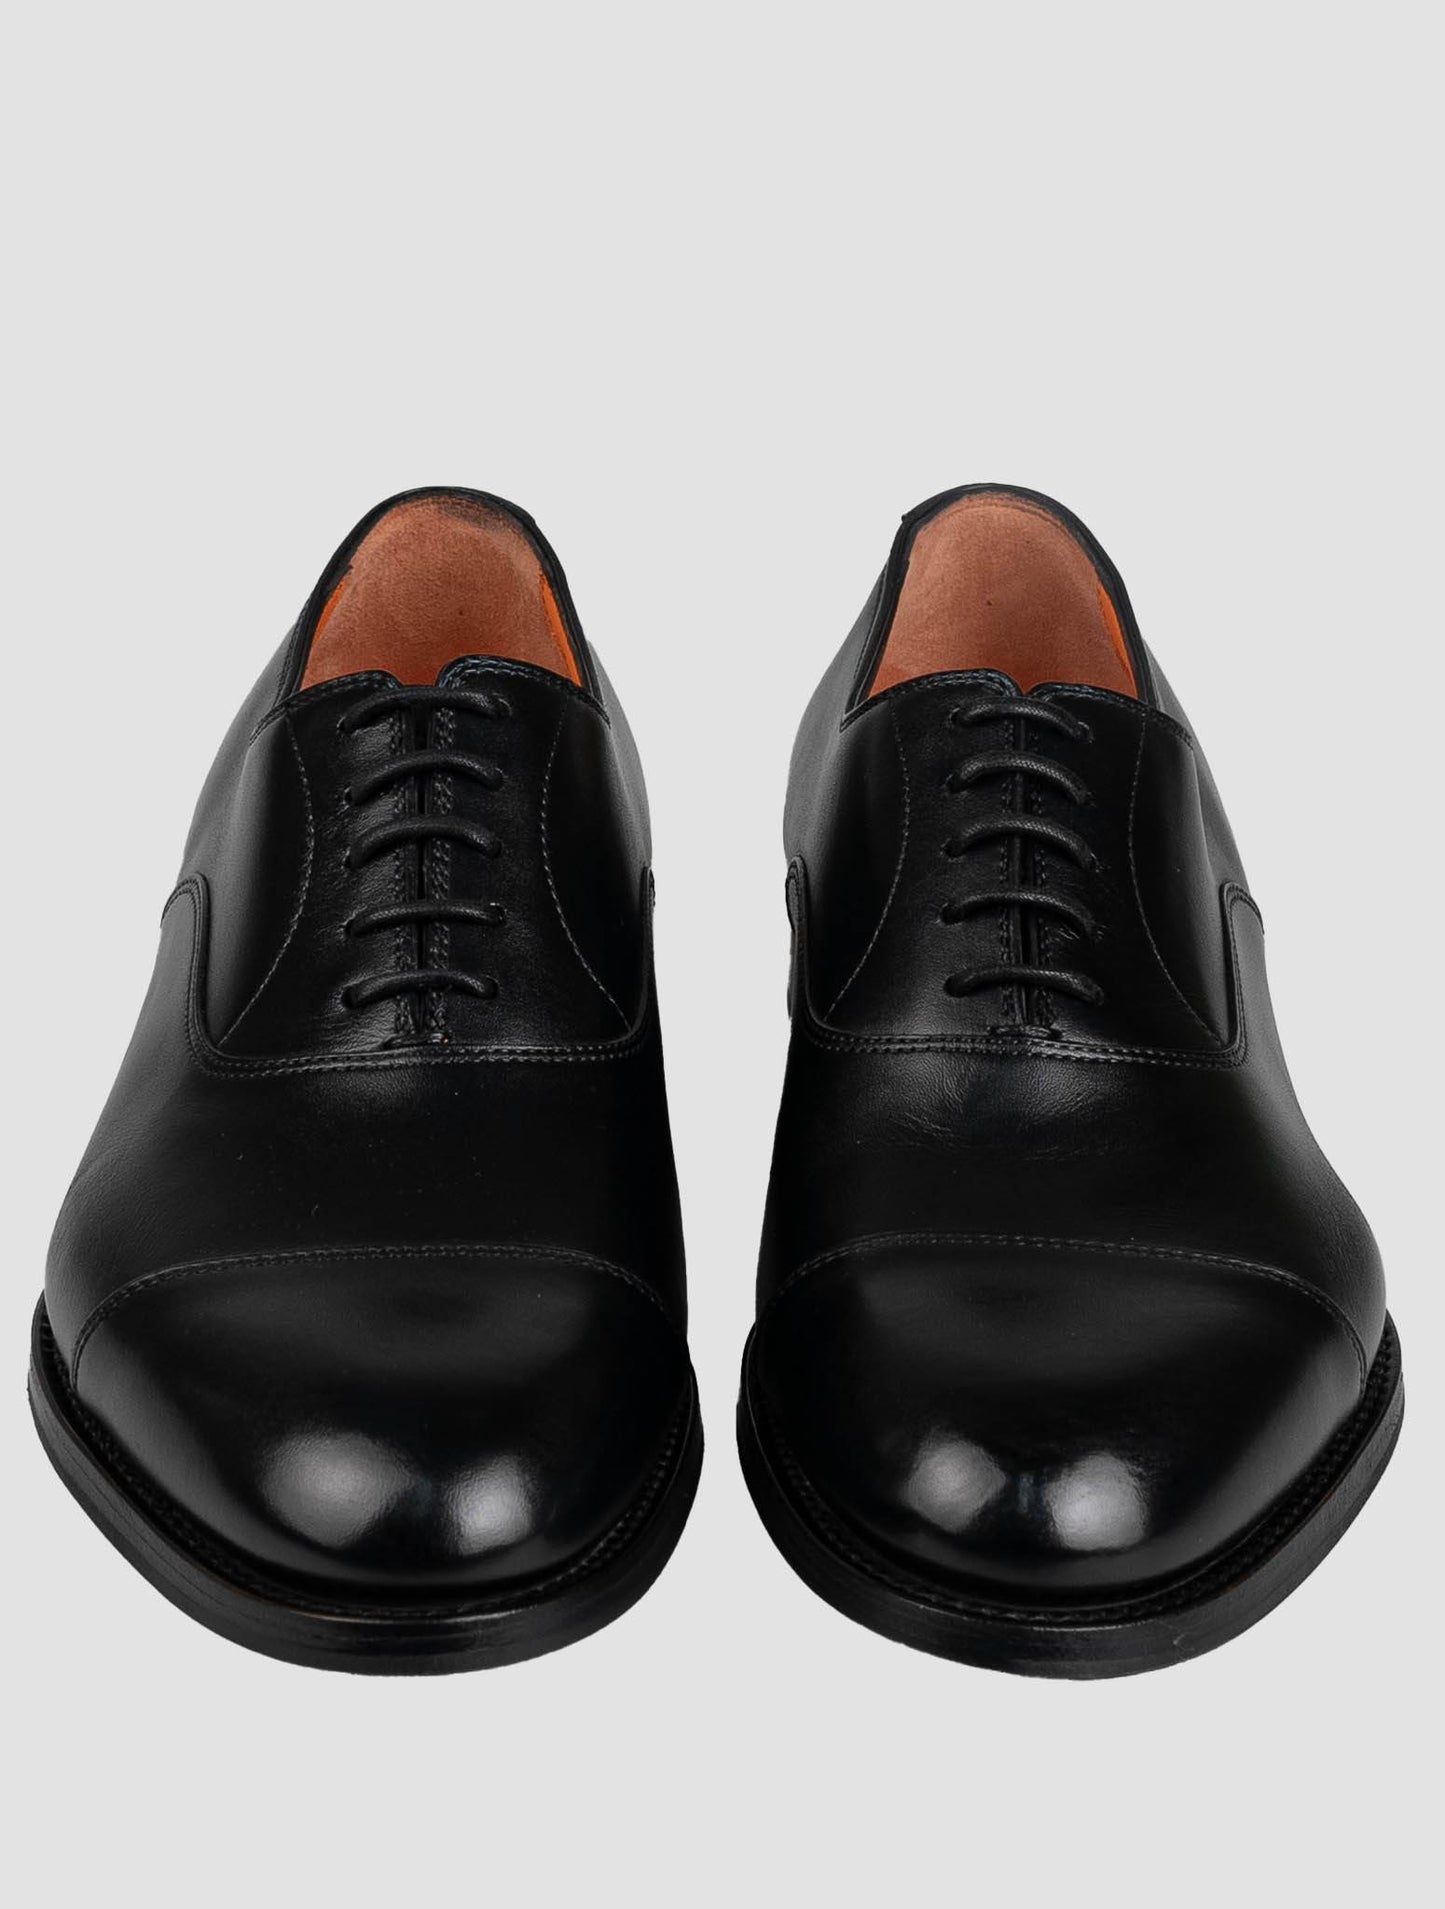 Santoni Black Leather Dress Shoes